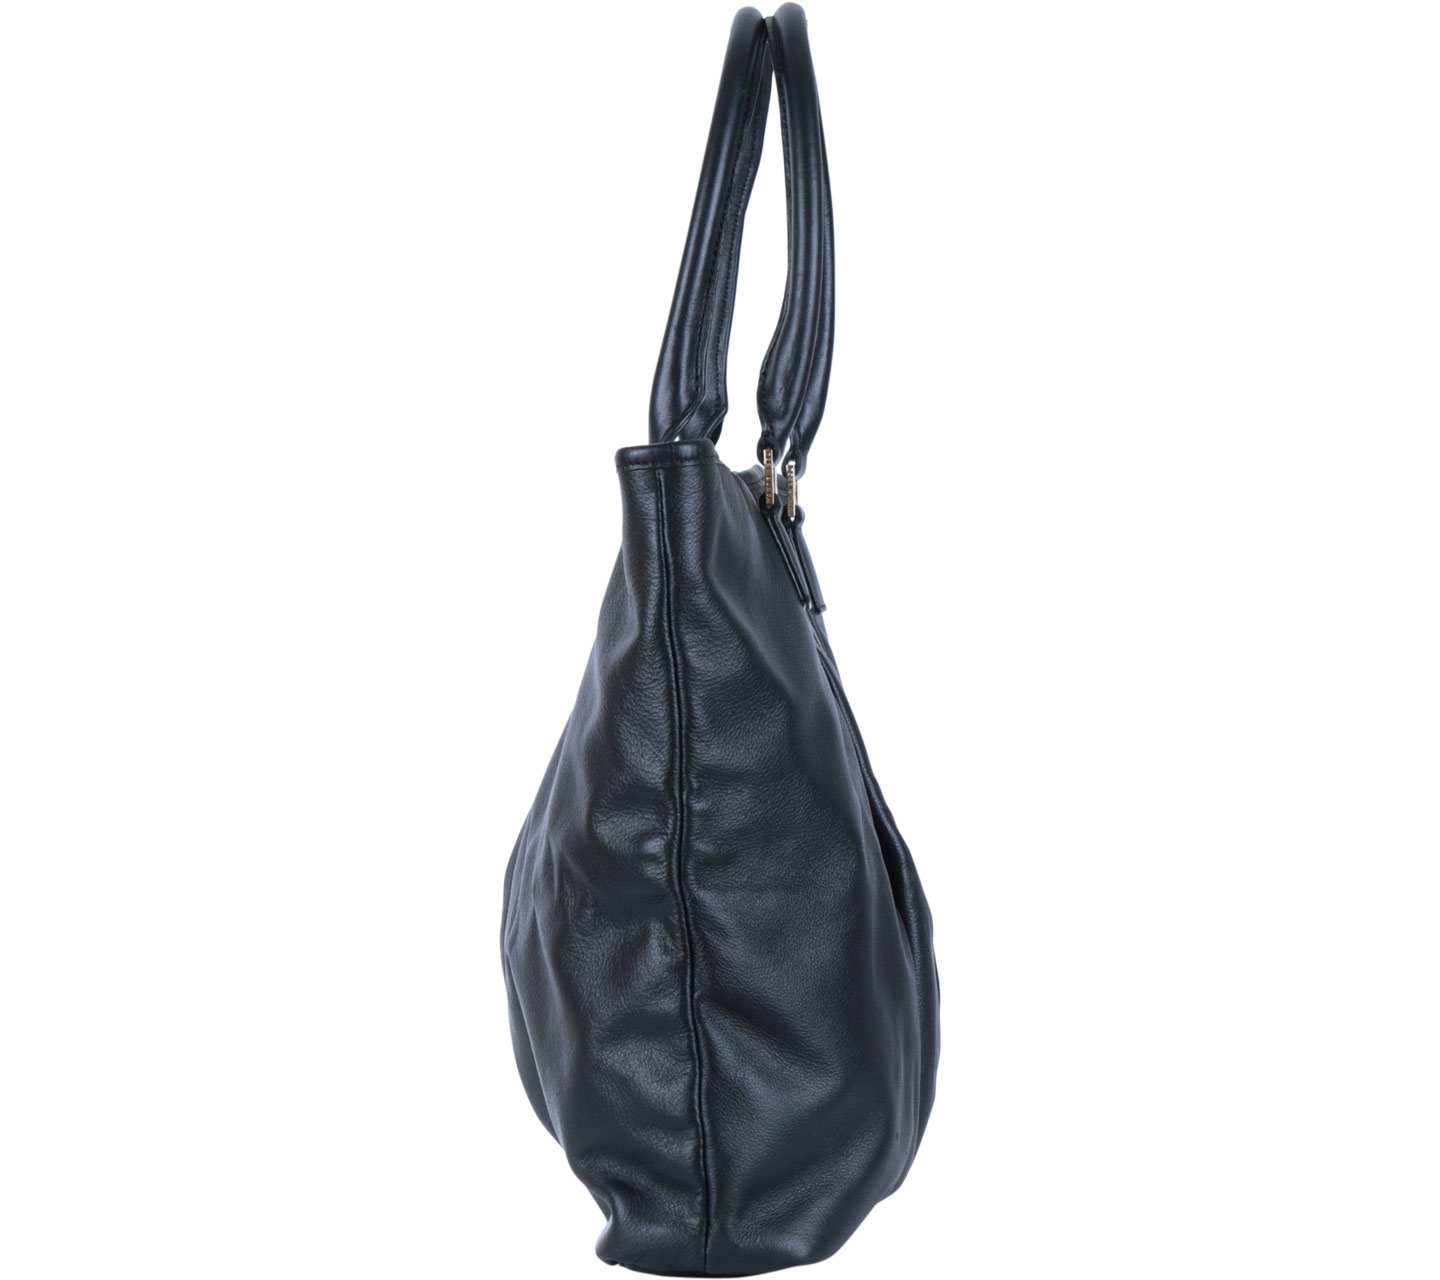 Tory Burch Black Verona Leather Handbag